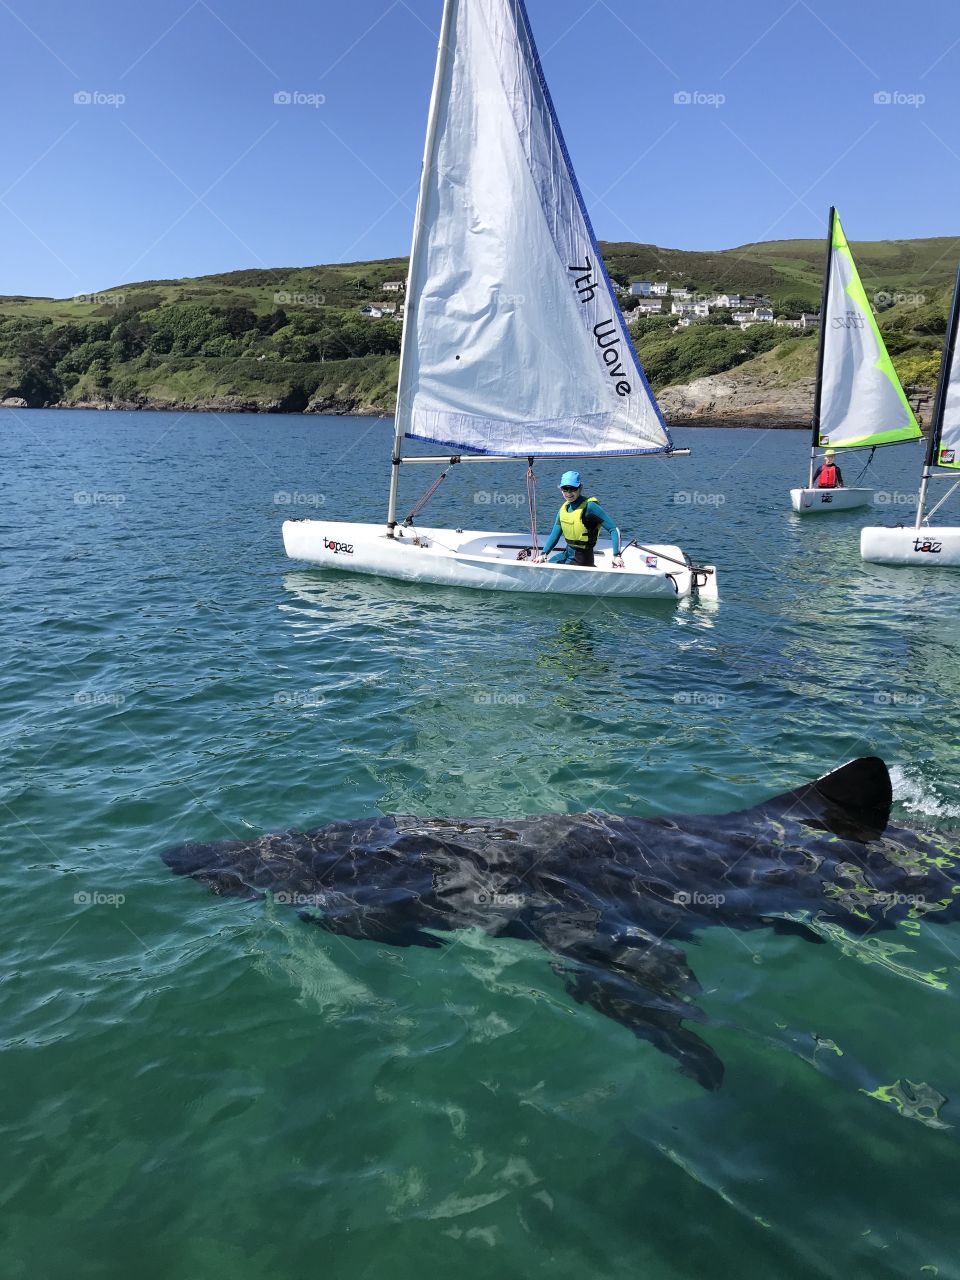 Isle of Man - Basking shark - Summer - Water-sports - Sailing 